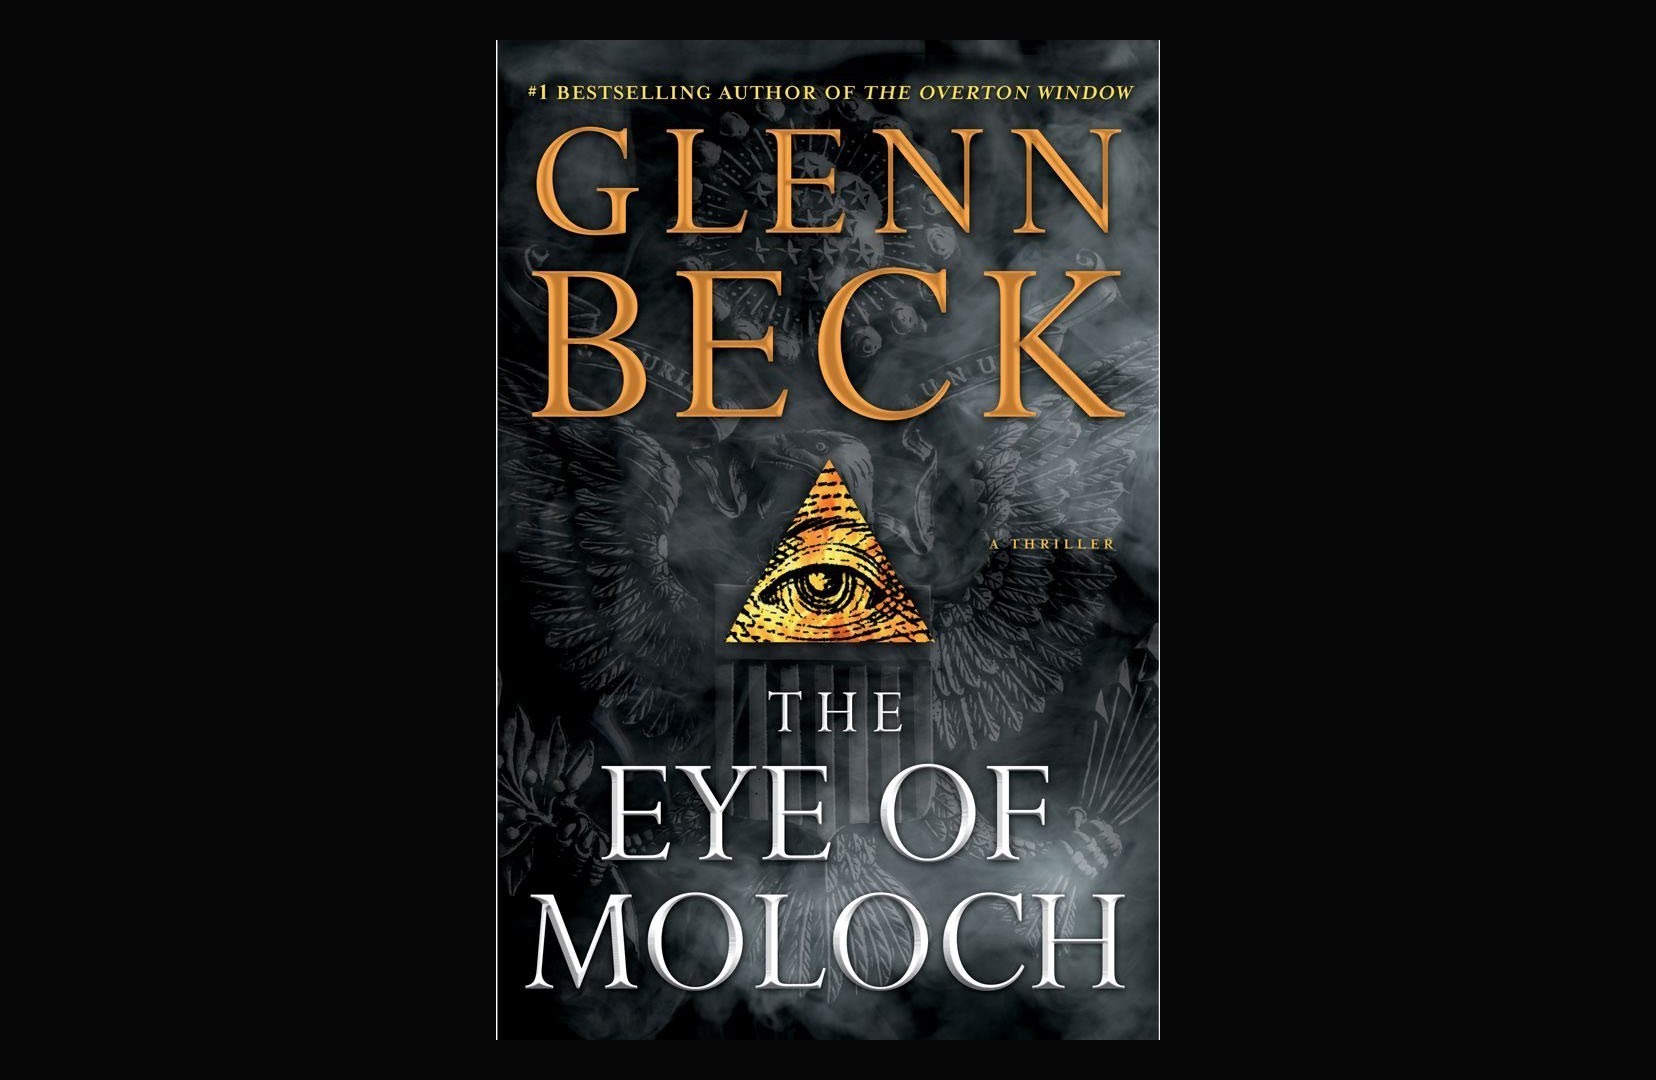 Glen Beck’s New “Eye of Moloch” Book Exposes the Illuminati?